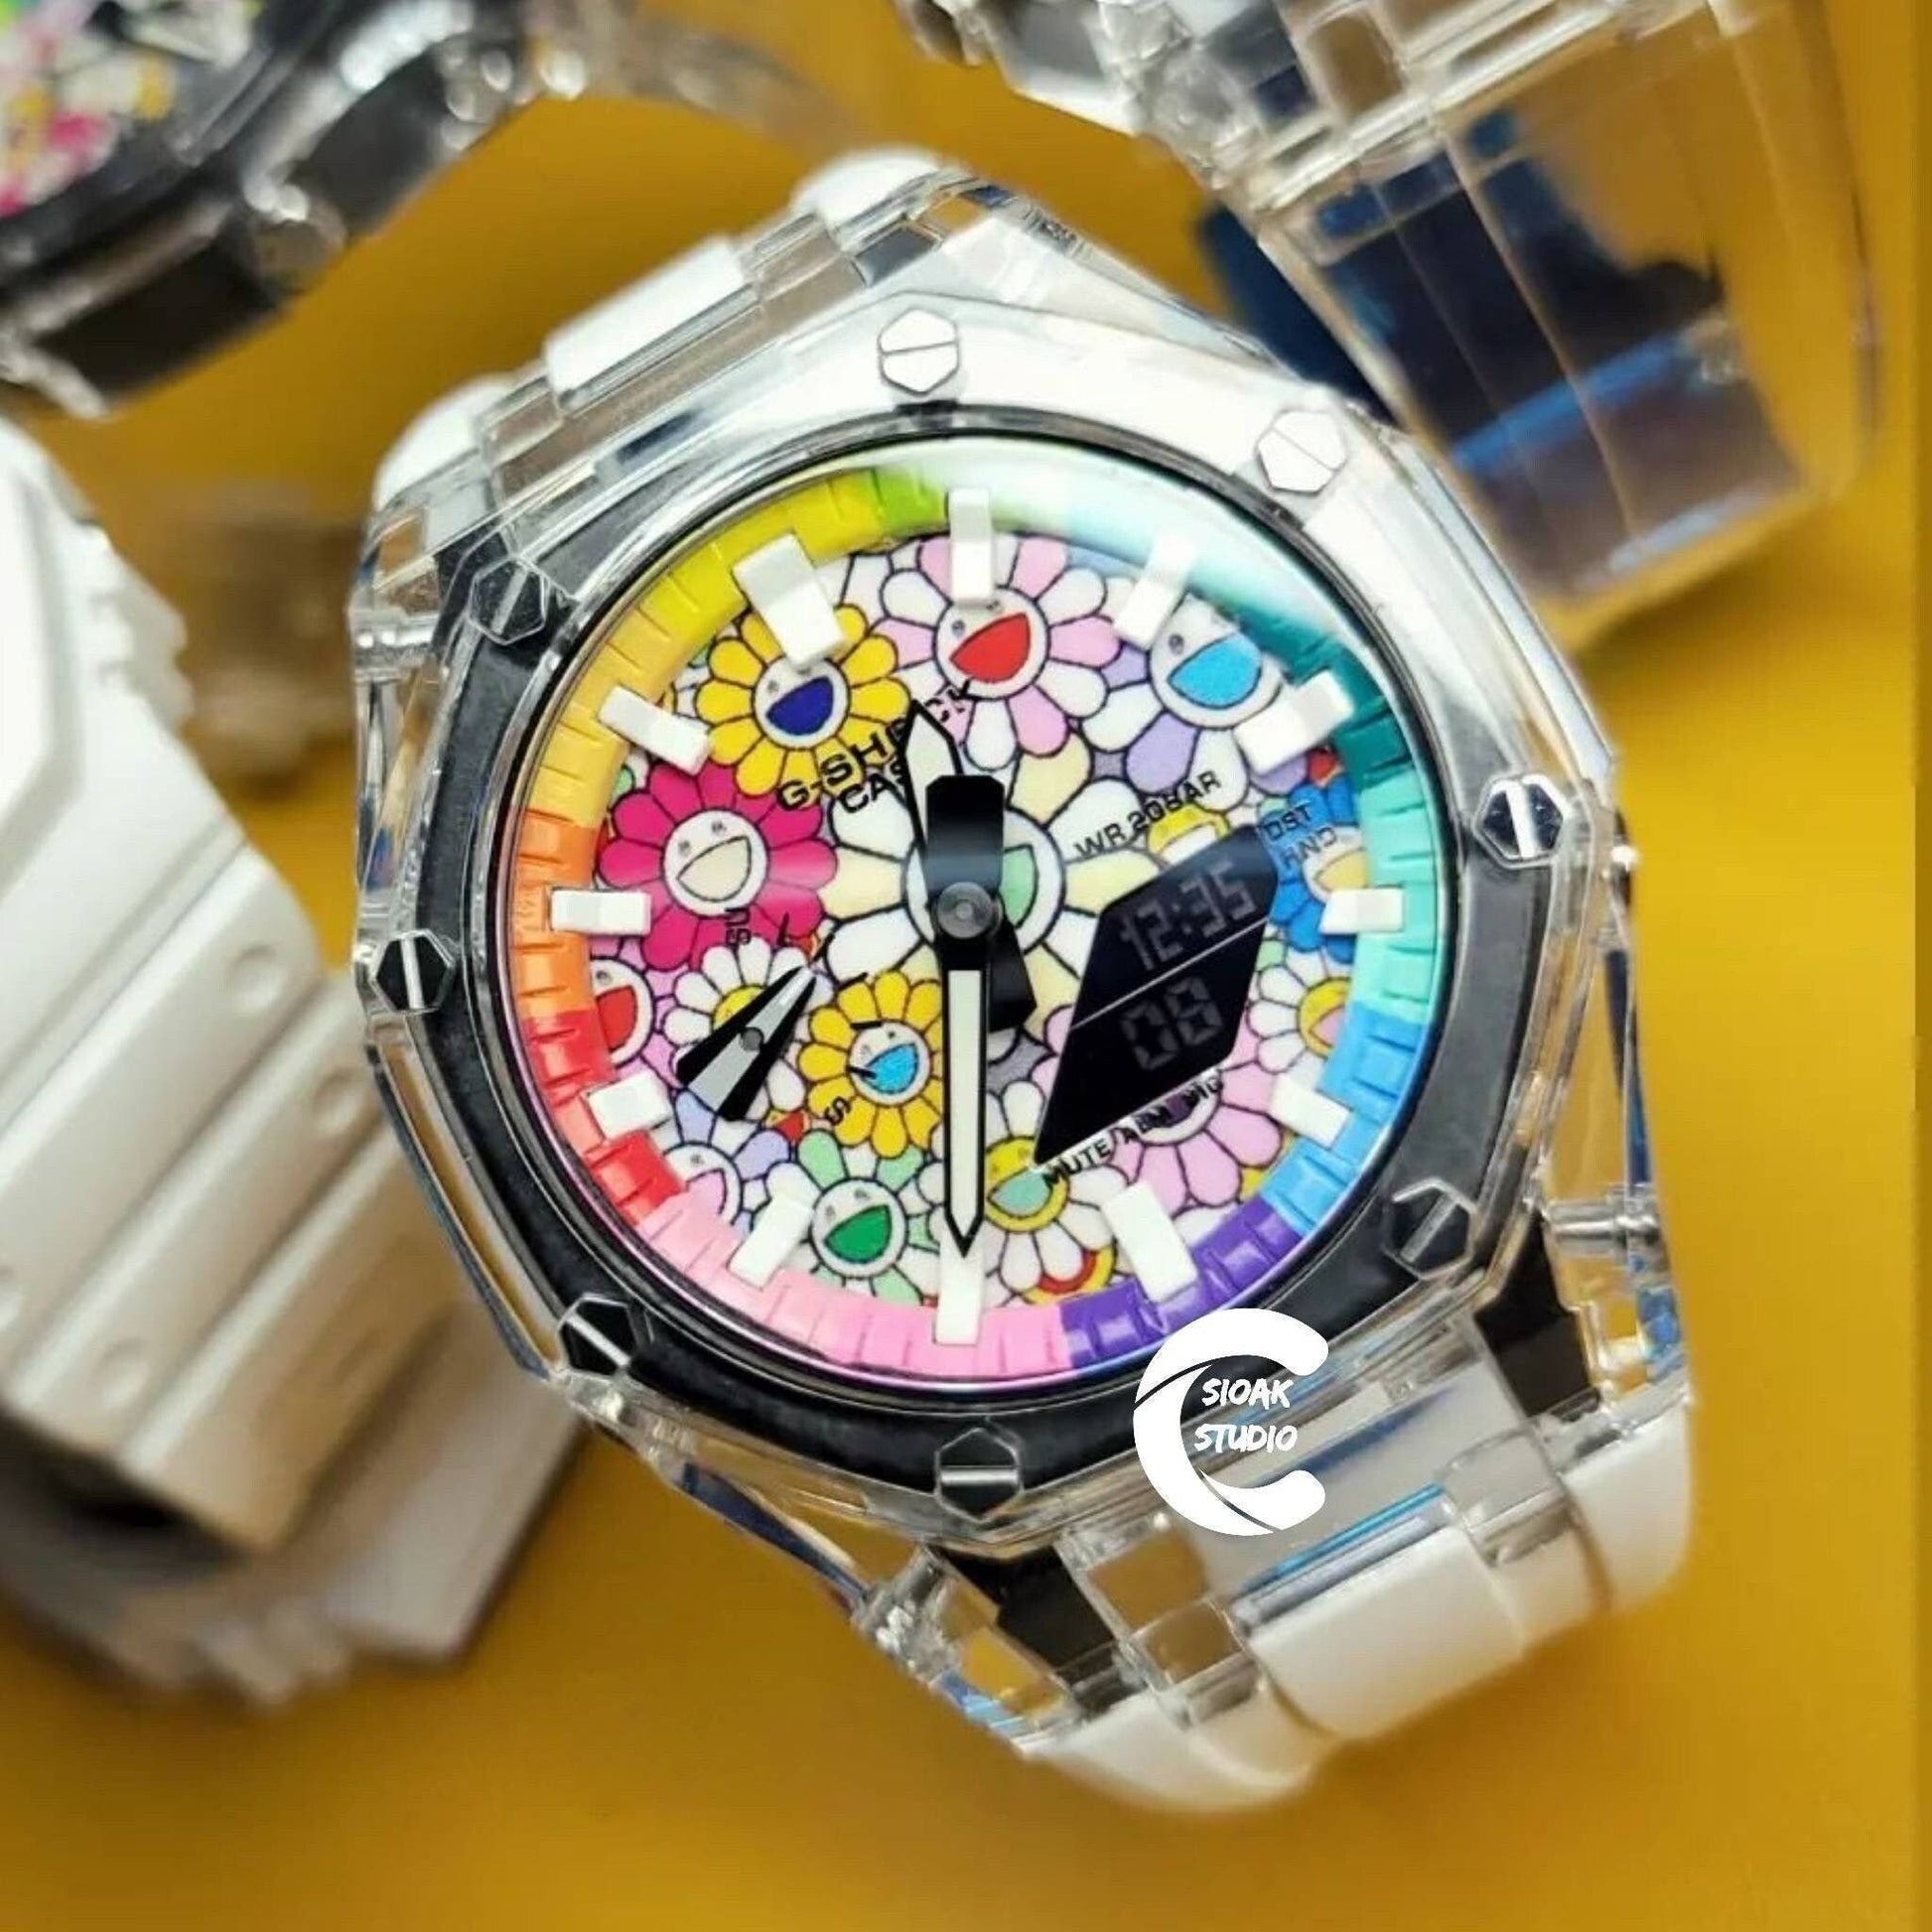 Casioak Mod Watch Transparent Case Strap Rainbow White Time Mark Takashi Murakami Dial 44mm - Casioak Studio